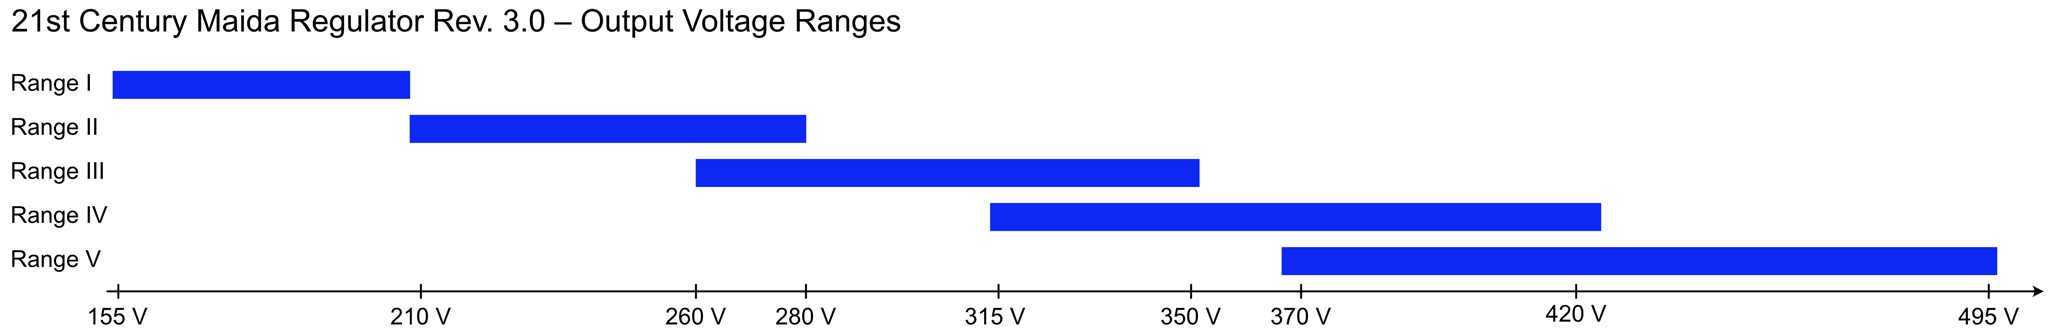 21st Century Maida Regulator Rev. 3.0 output voltage ranges